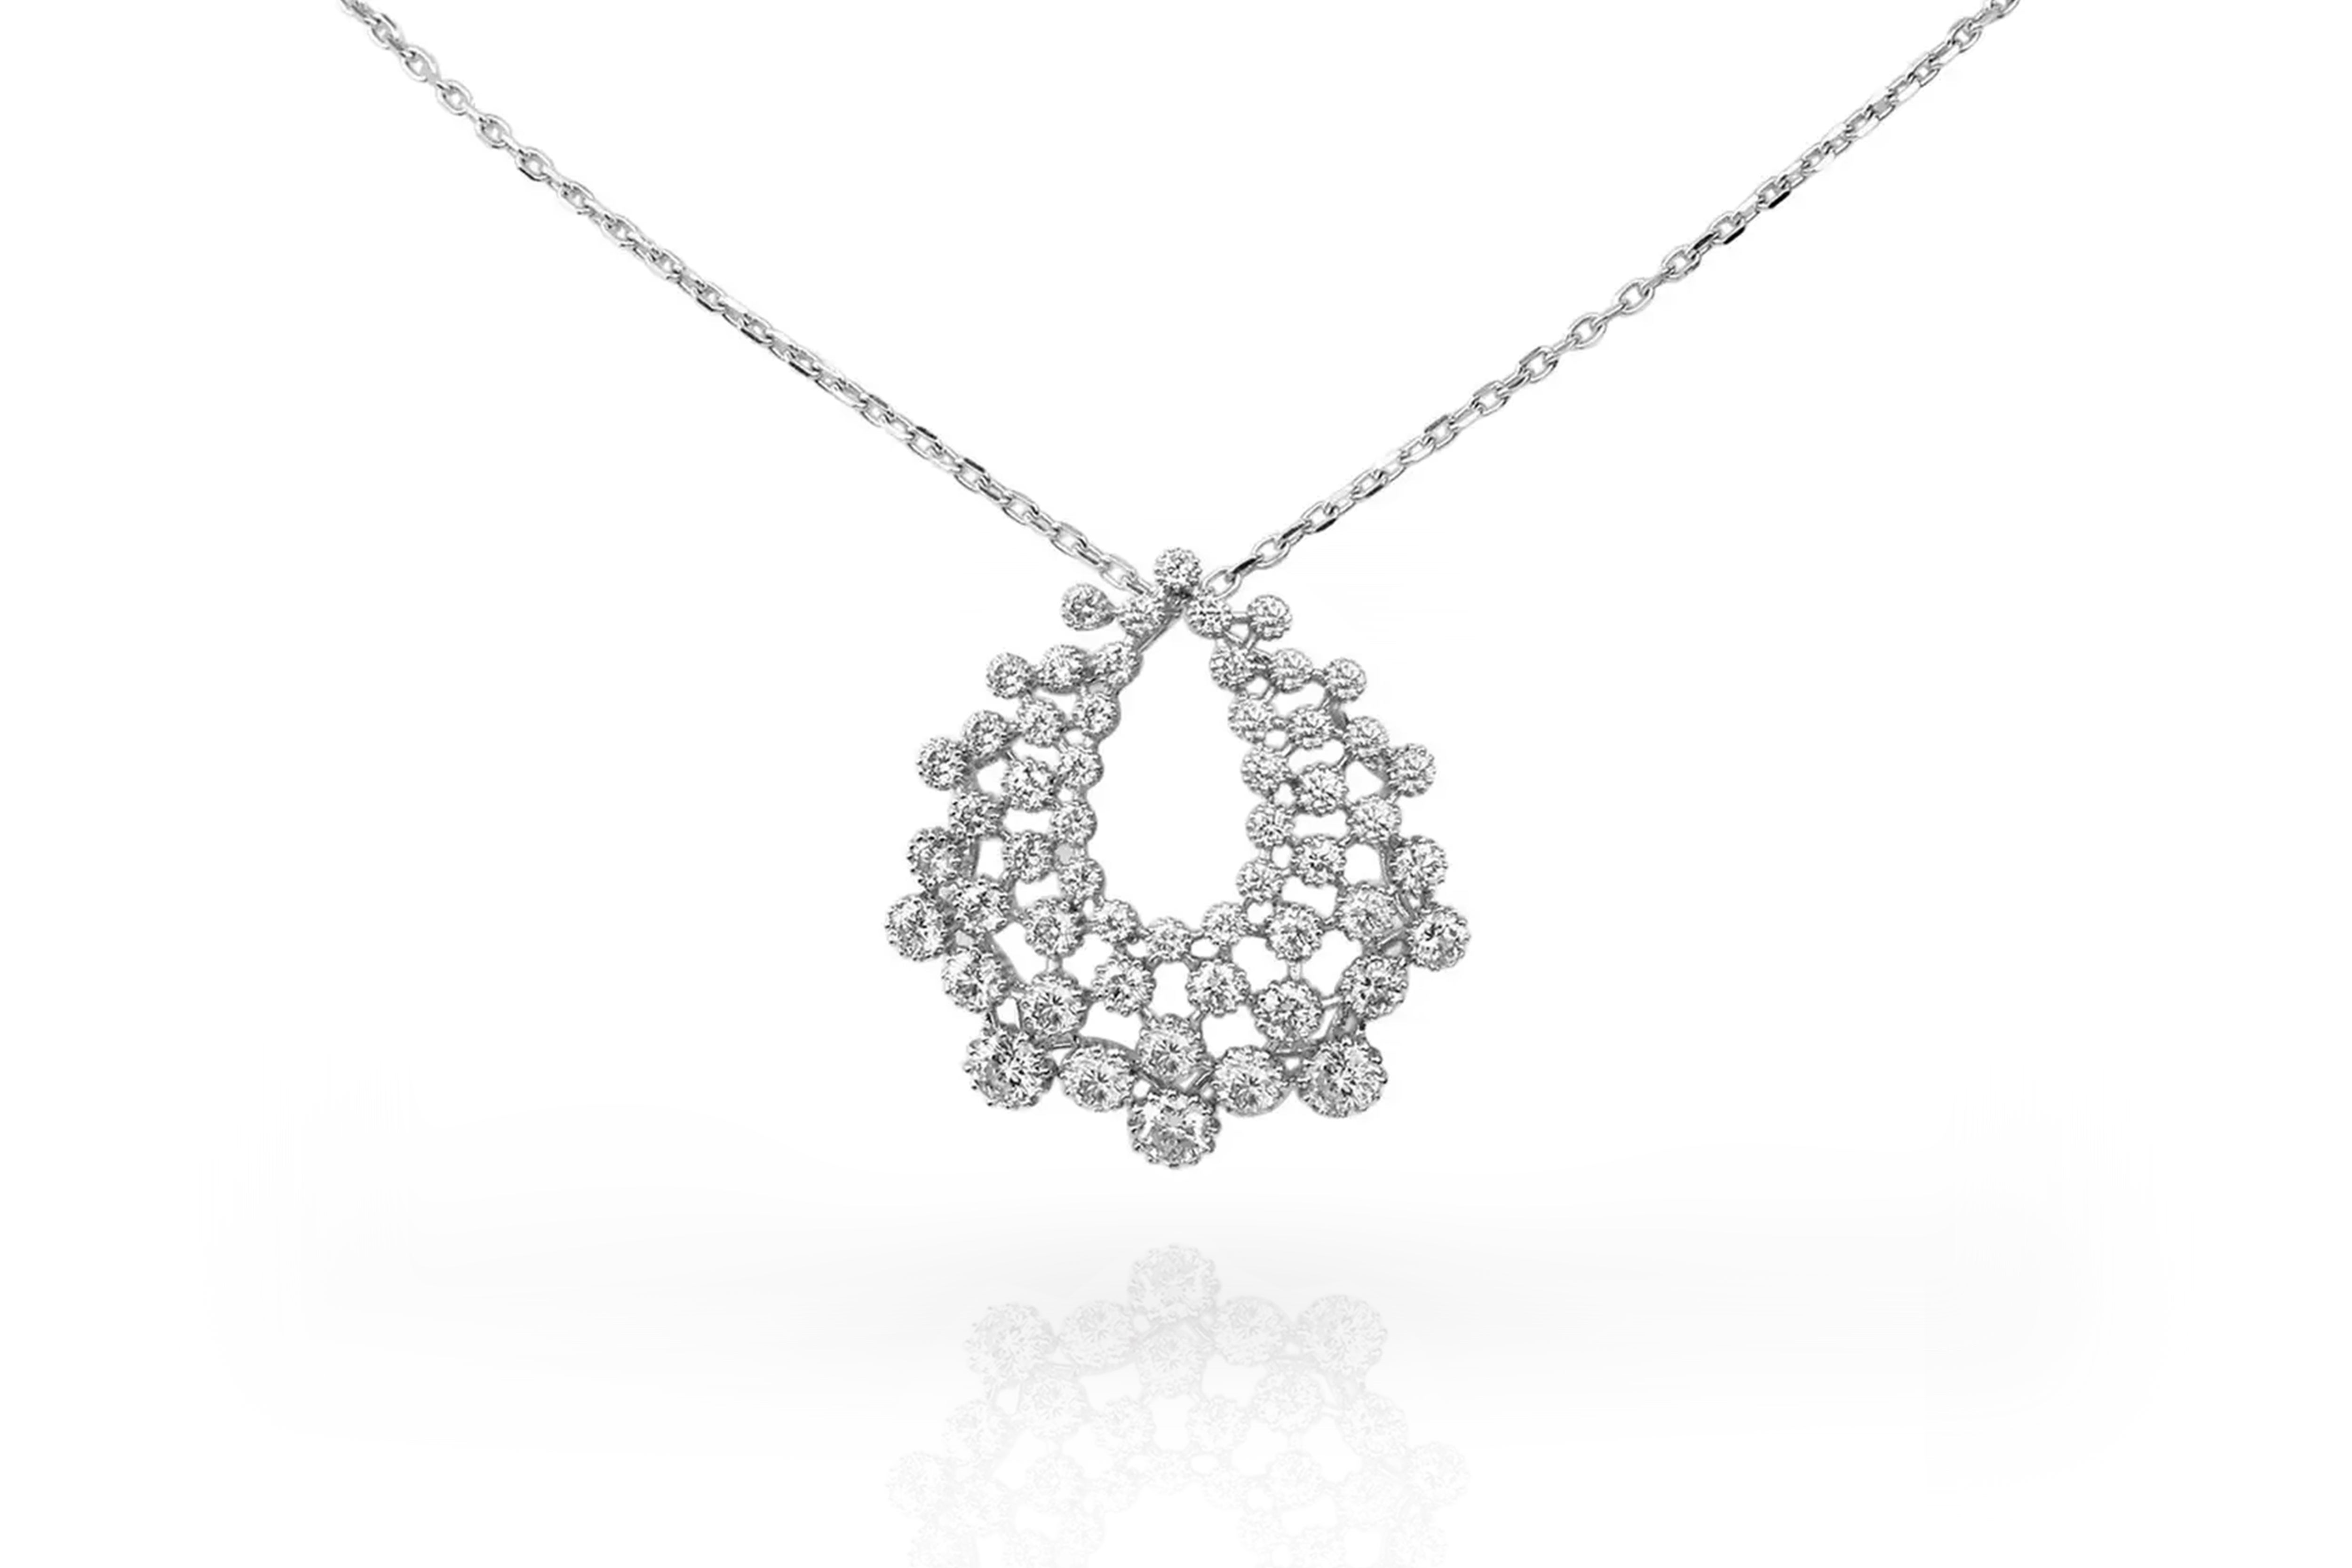 18 Karat Gold Pendant Necklace White Gold Diamond Pave Fashion Pendant Necklace